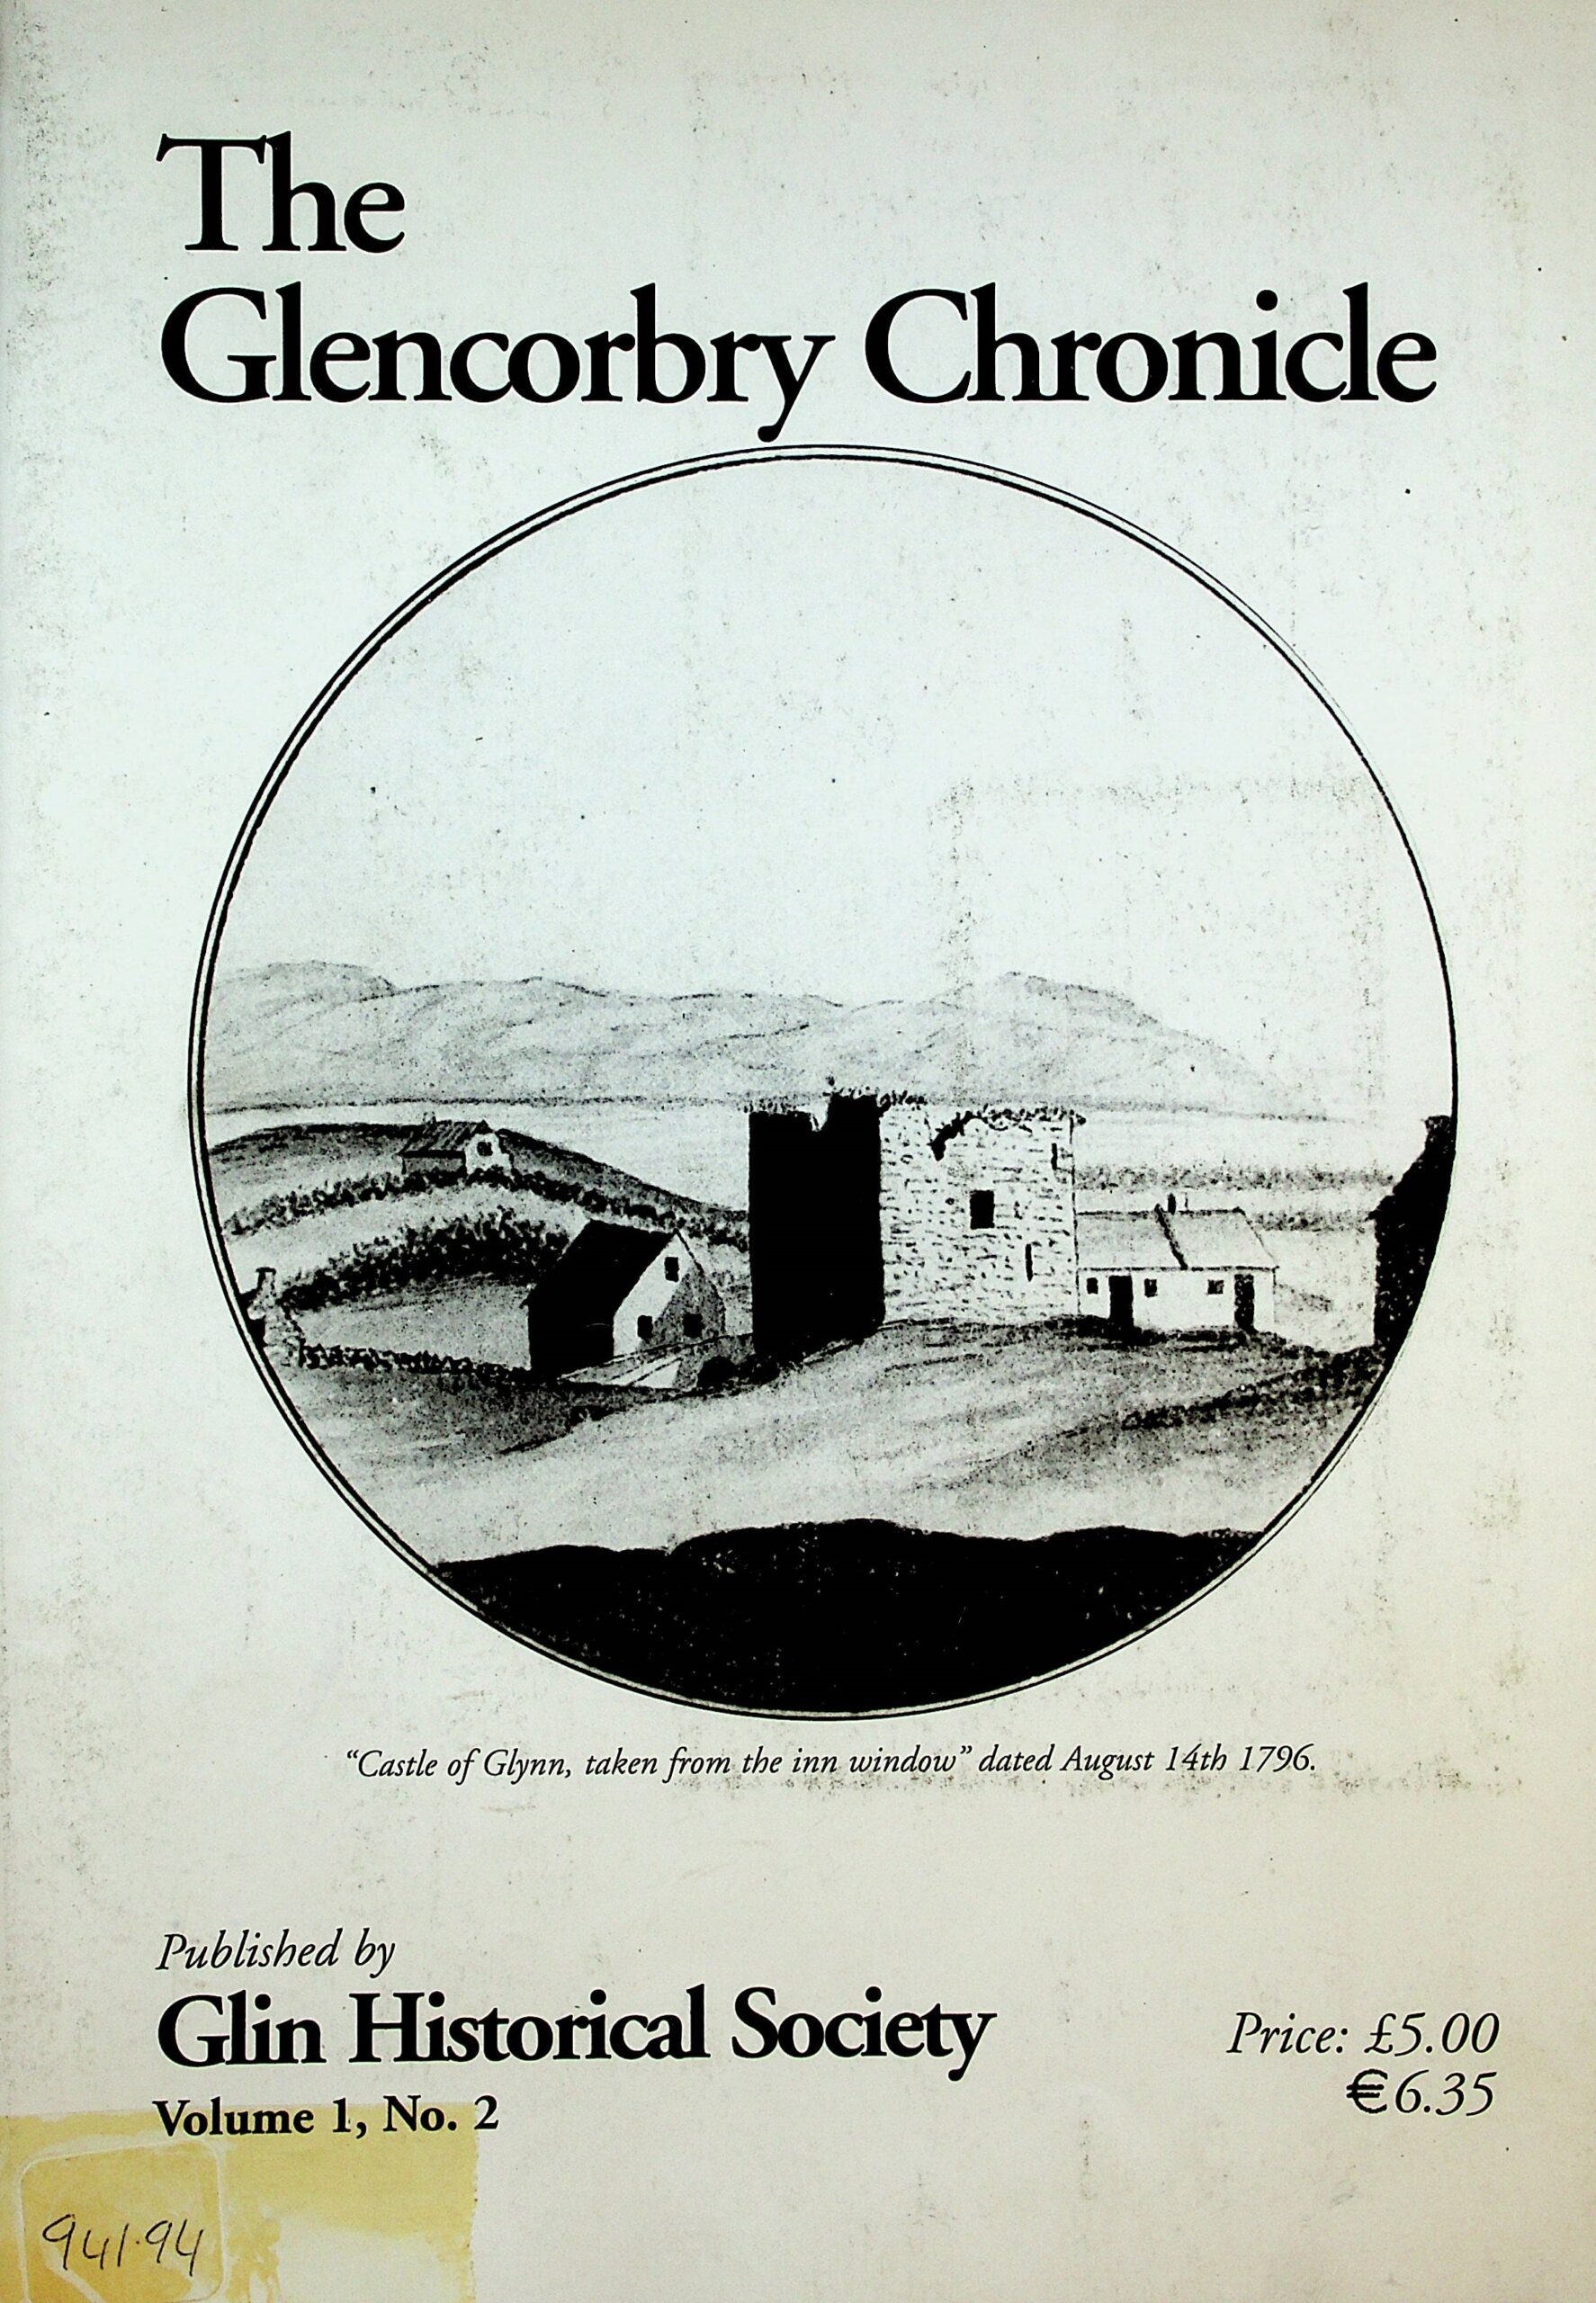 The Glencorbry Chronicle (Glin, Co. Limerick)